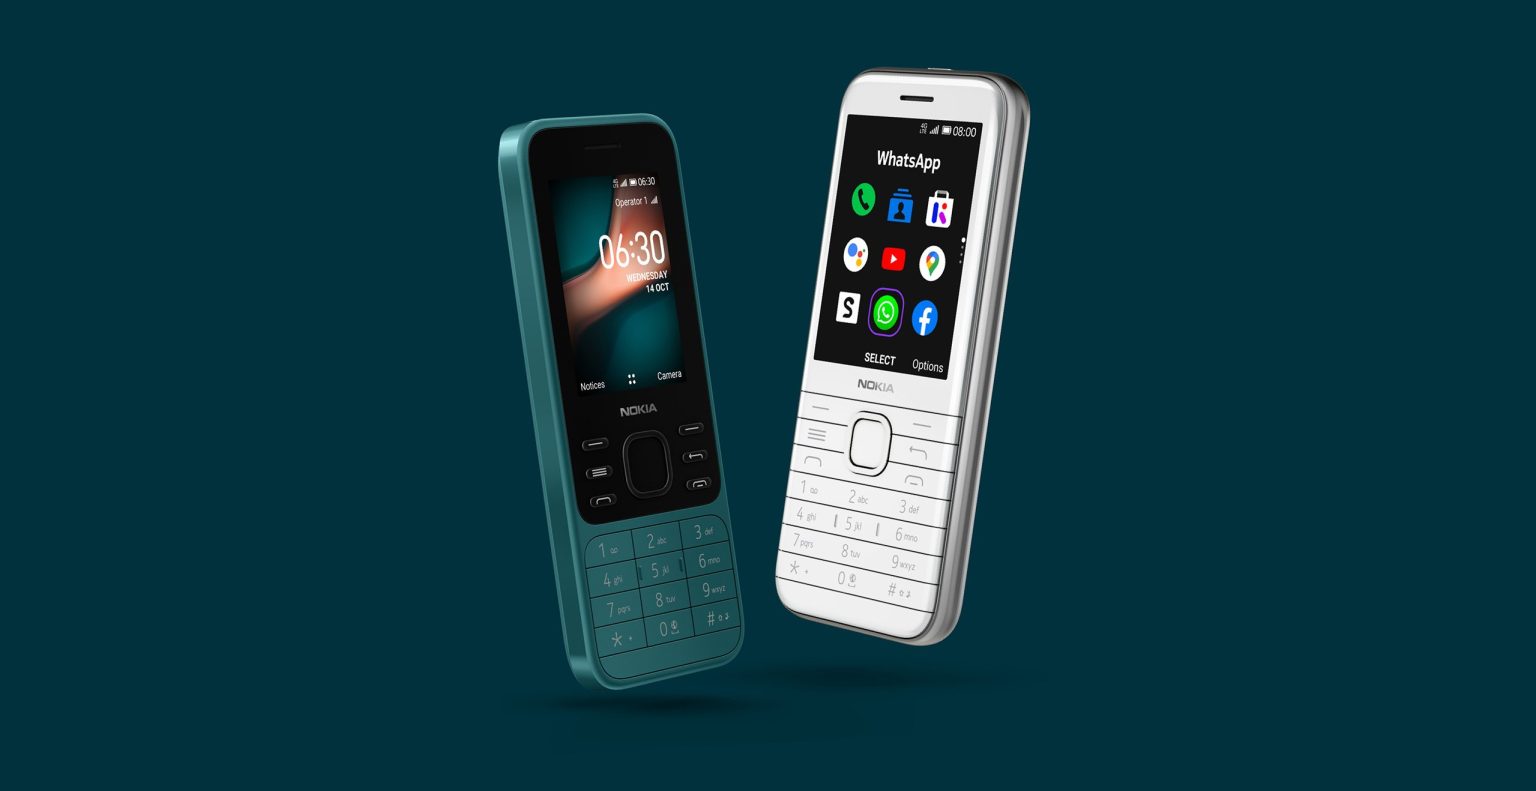 ezgif.com gif maker 2 1536x791 - Nokia 8000 4G price in Nigeria and full specs